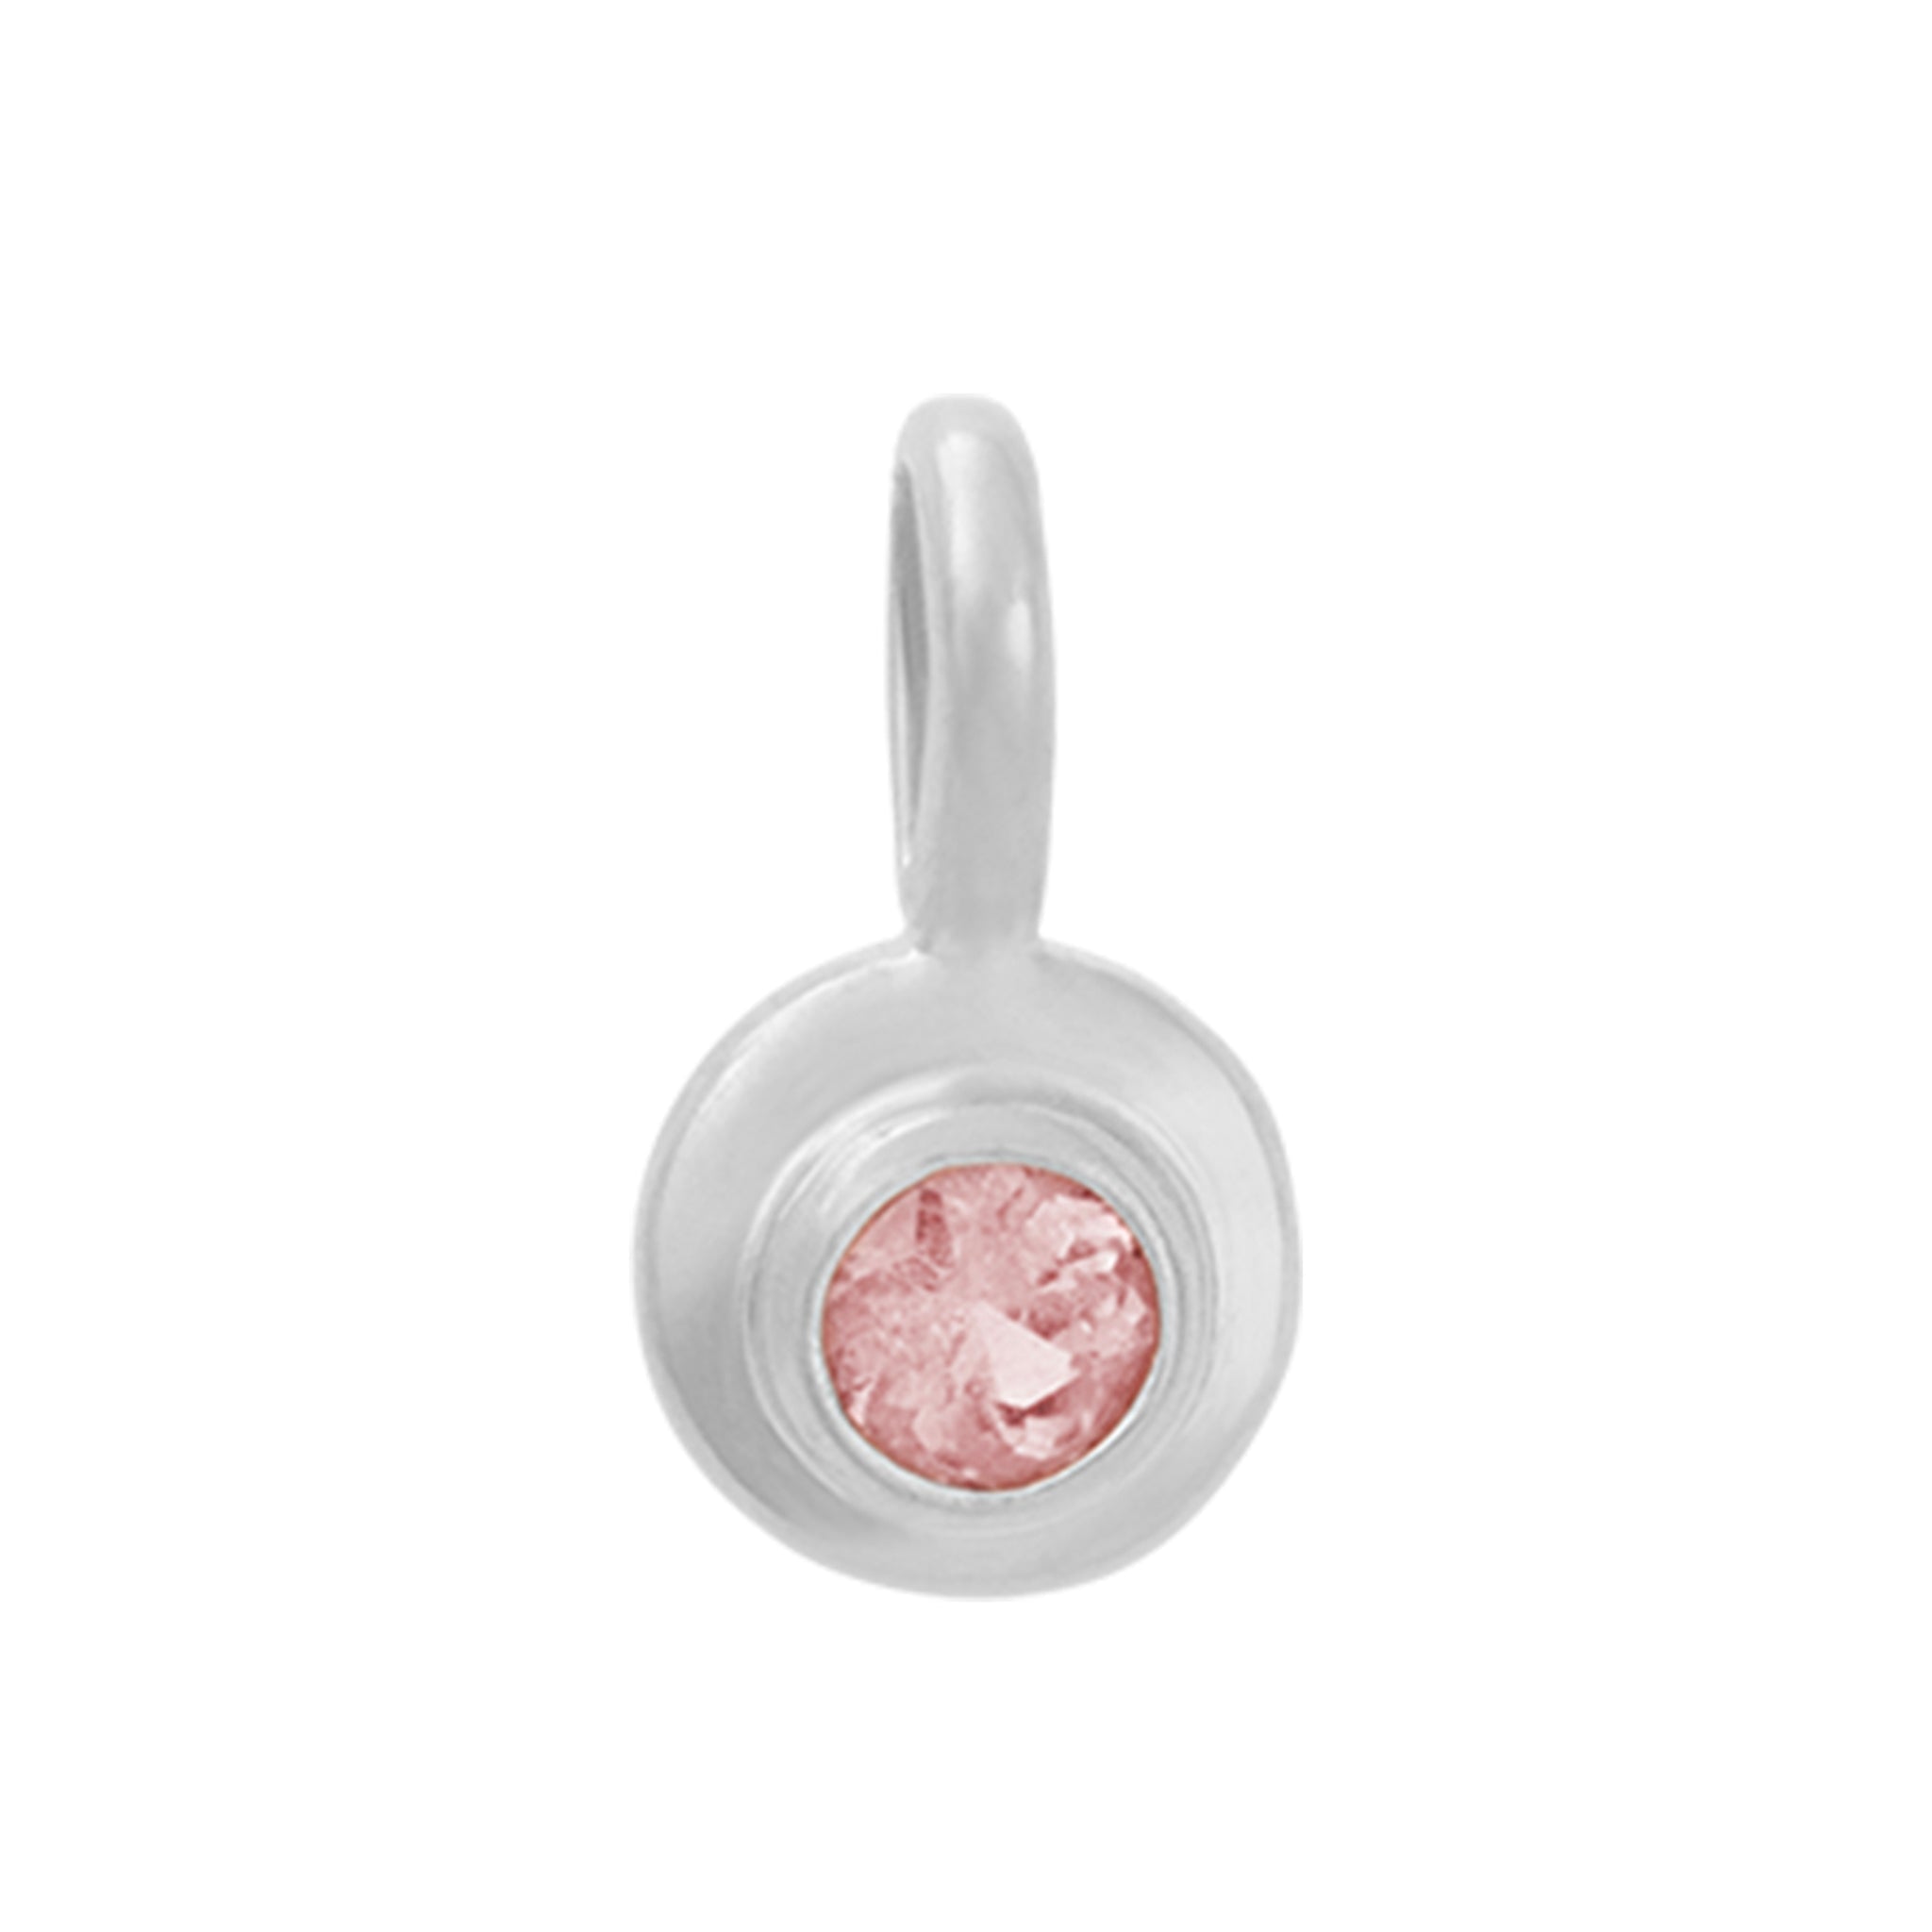 Kirstin Ash Birthstone Collection Charm - October / Pink Tourmaline - Tea Pea Home